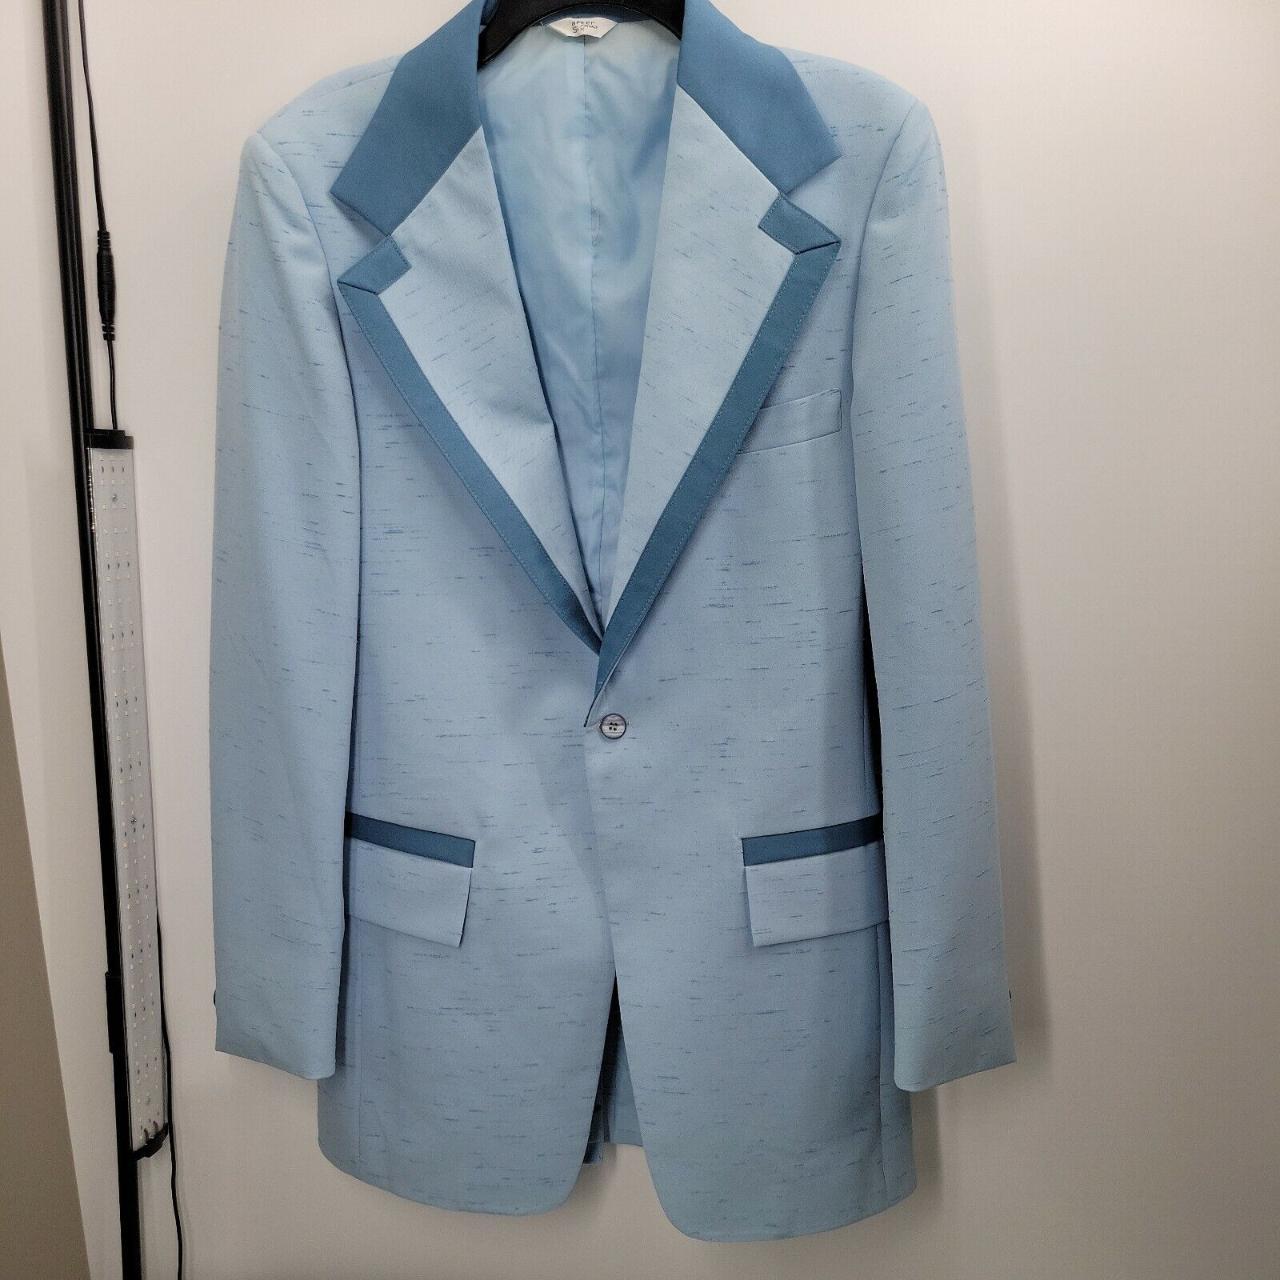 Product Image 1 - Vintage Blue Leisure Suit Jacket